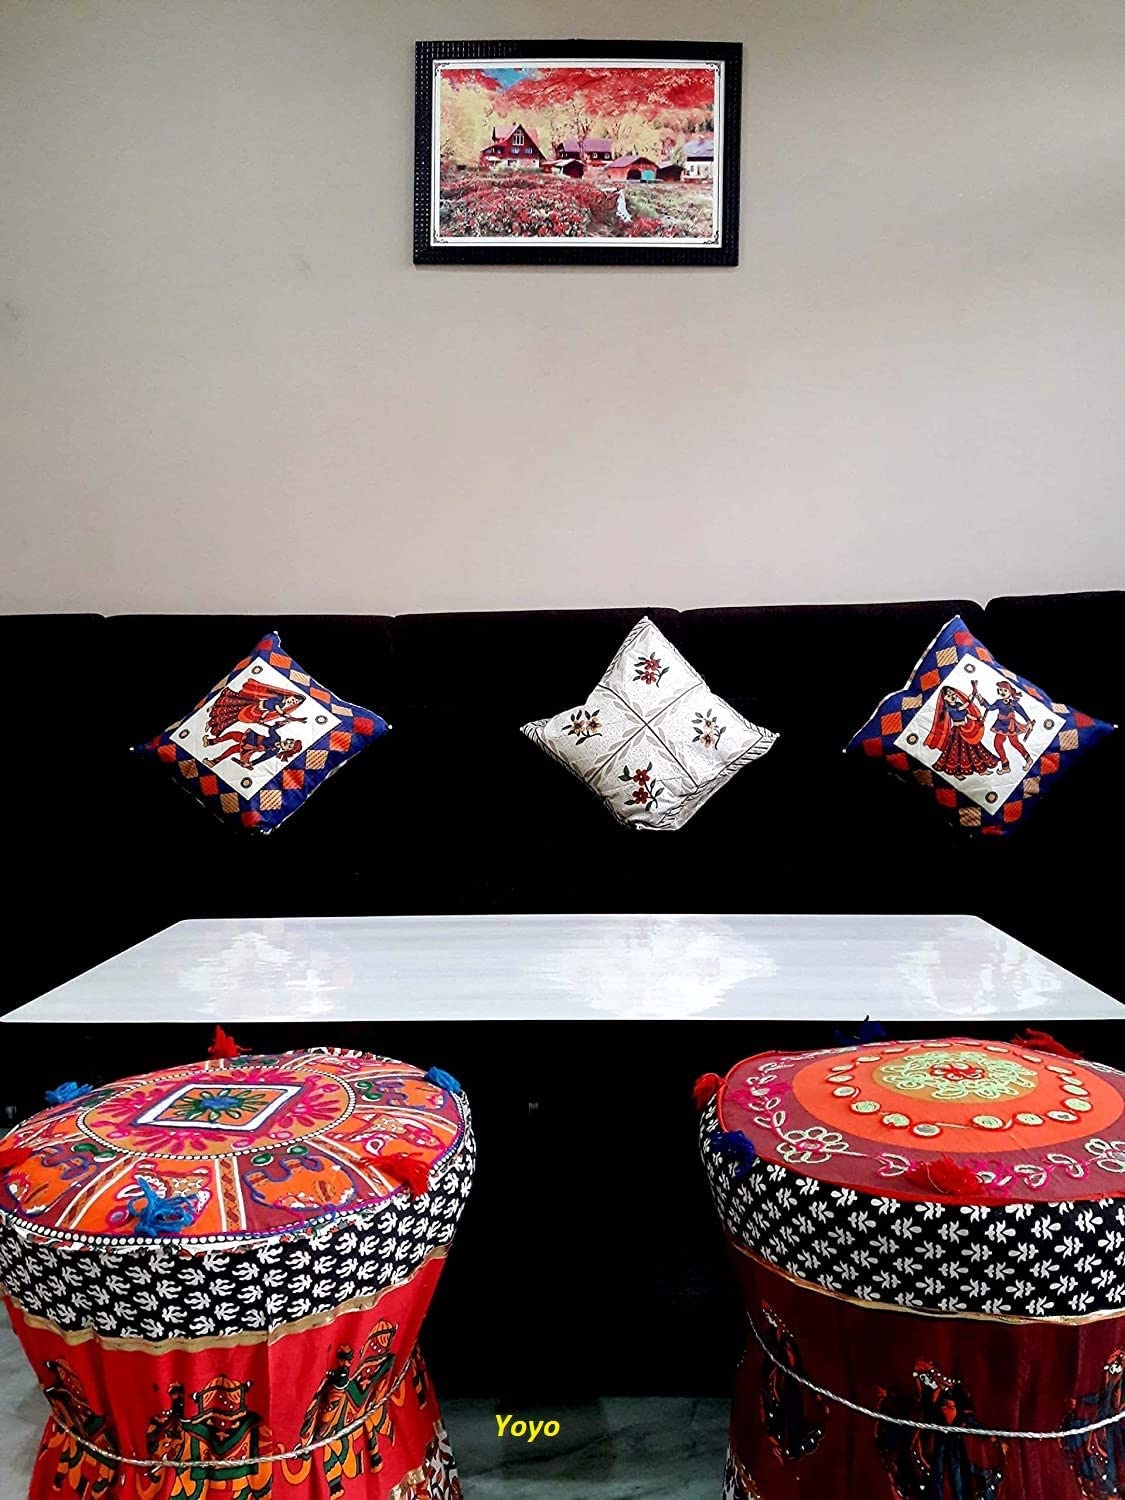 Lamansh rajasthani mudda for event decoration LAMANSH® Rajasthani cushion Mudda Stool Chair for Event Decoration / Perfect for Ethnic Indian events & backdrop